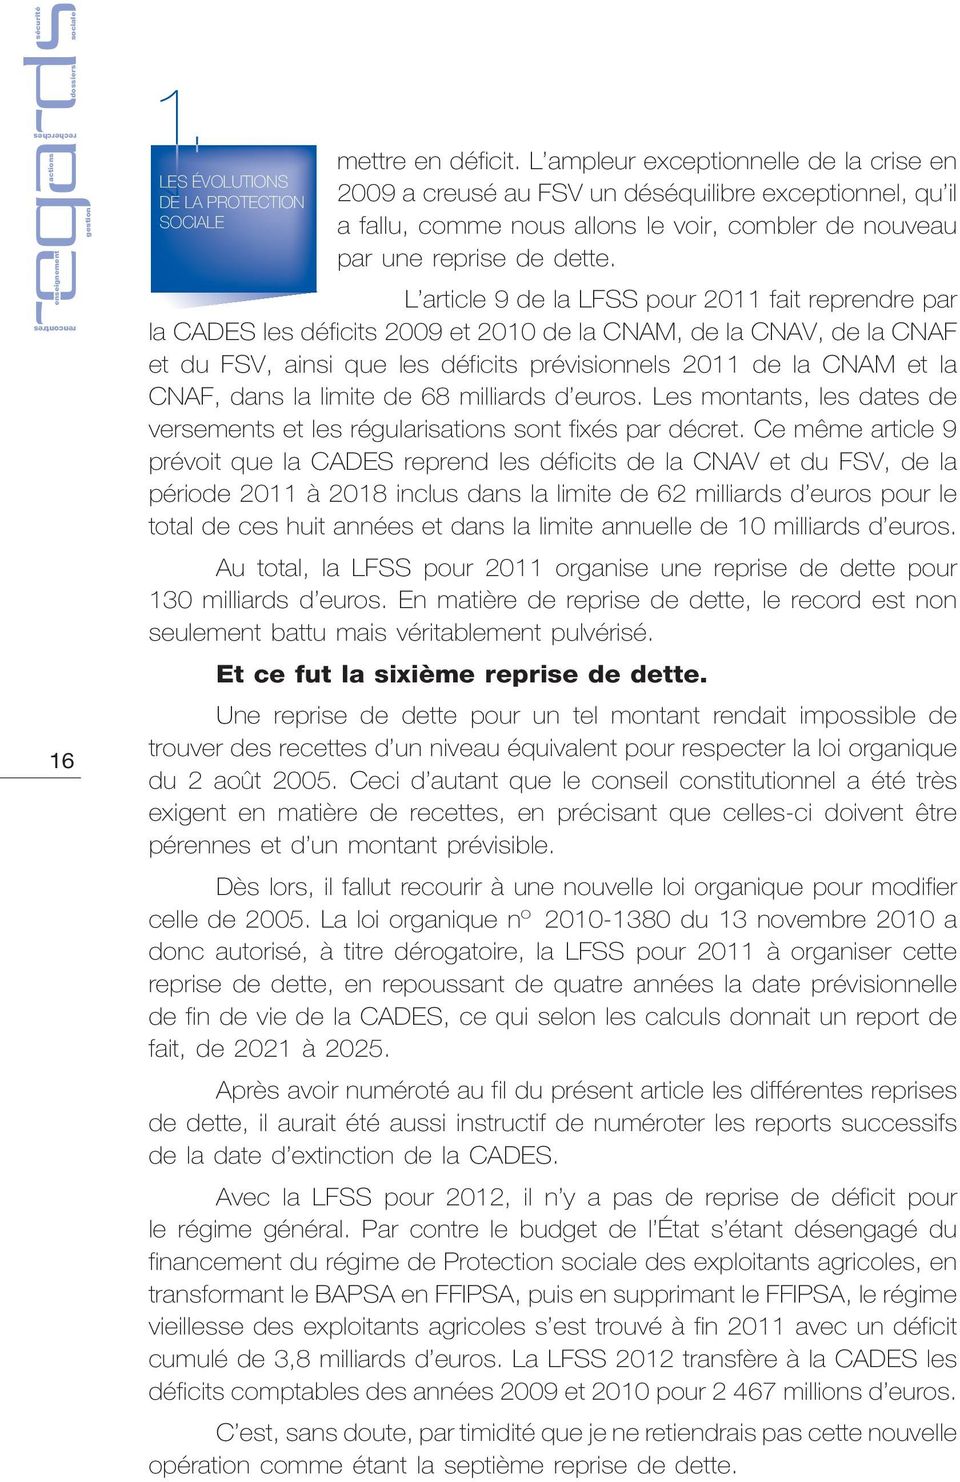 L article 9 de la LFSS pour 2011 fait reprendre par la CADES les déficits 2009 et 2010 de la CNAM, de la CNAV, de la CNAF et du FSV, ainsi que les déficits prévisionnels 2011 de la CNAM et la CNAF,